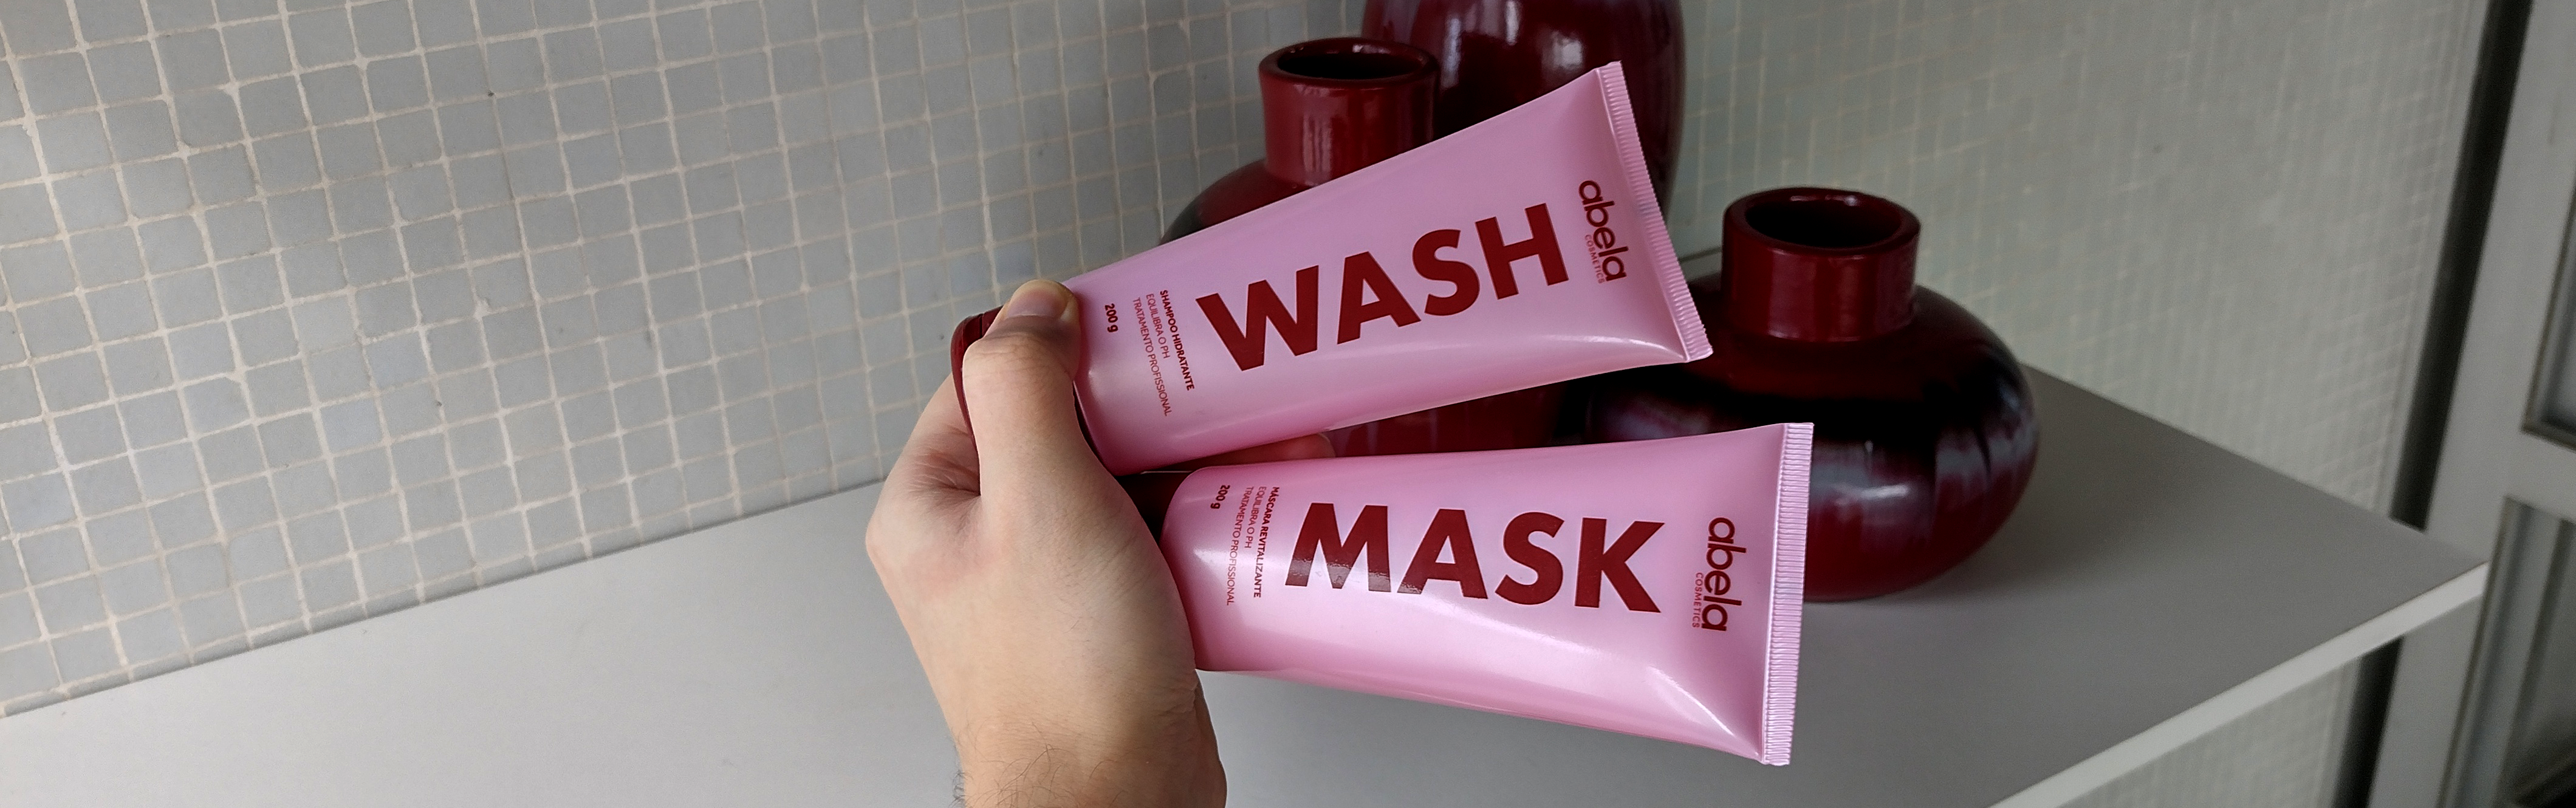 Shampoo Abela Wash e Máscara Abela Mask - Resenha completa da linha liberada